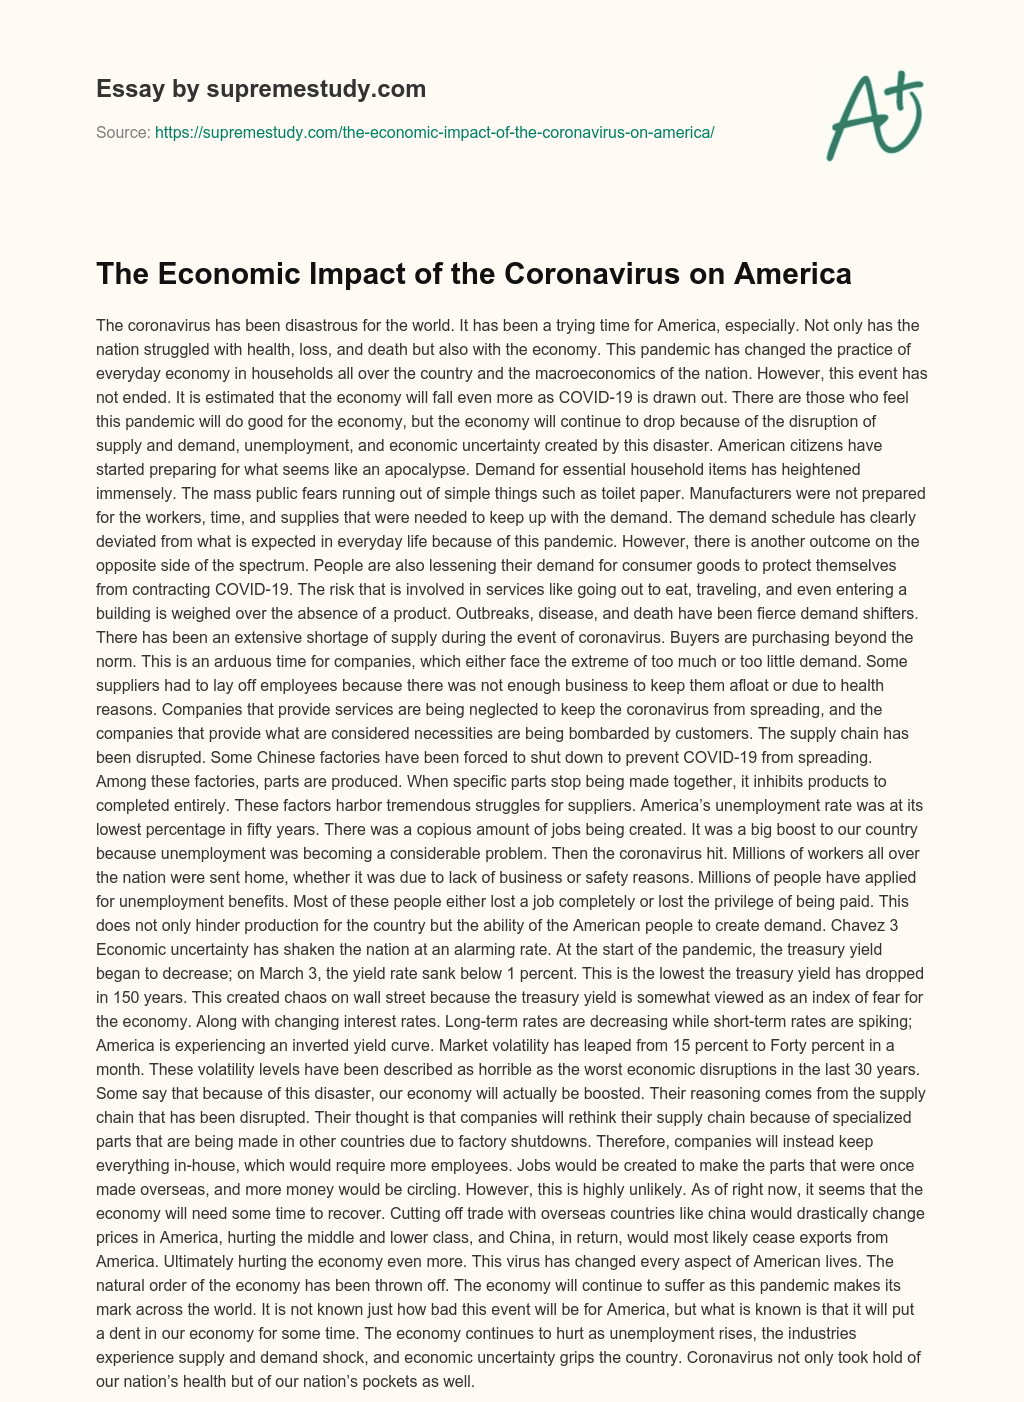 The Economic Impact of the Coronavirus on America essay